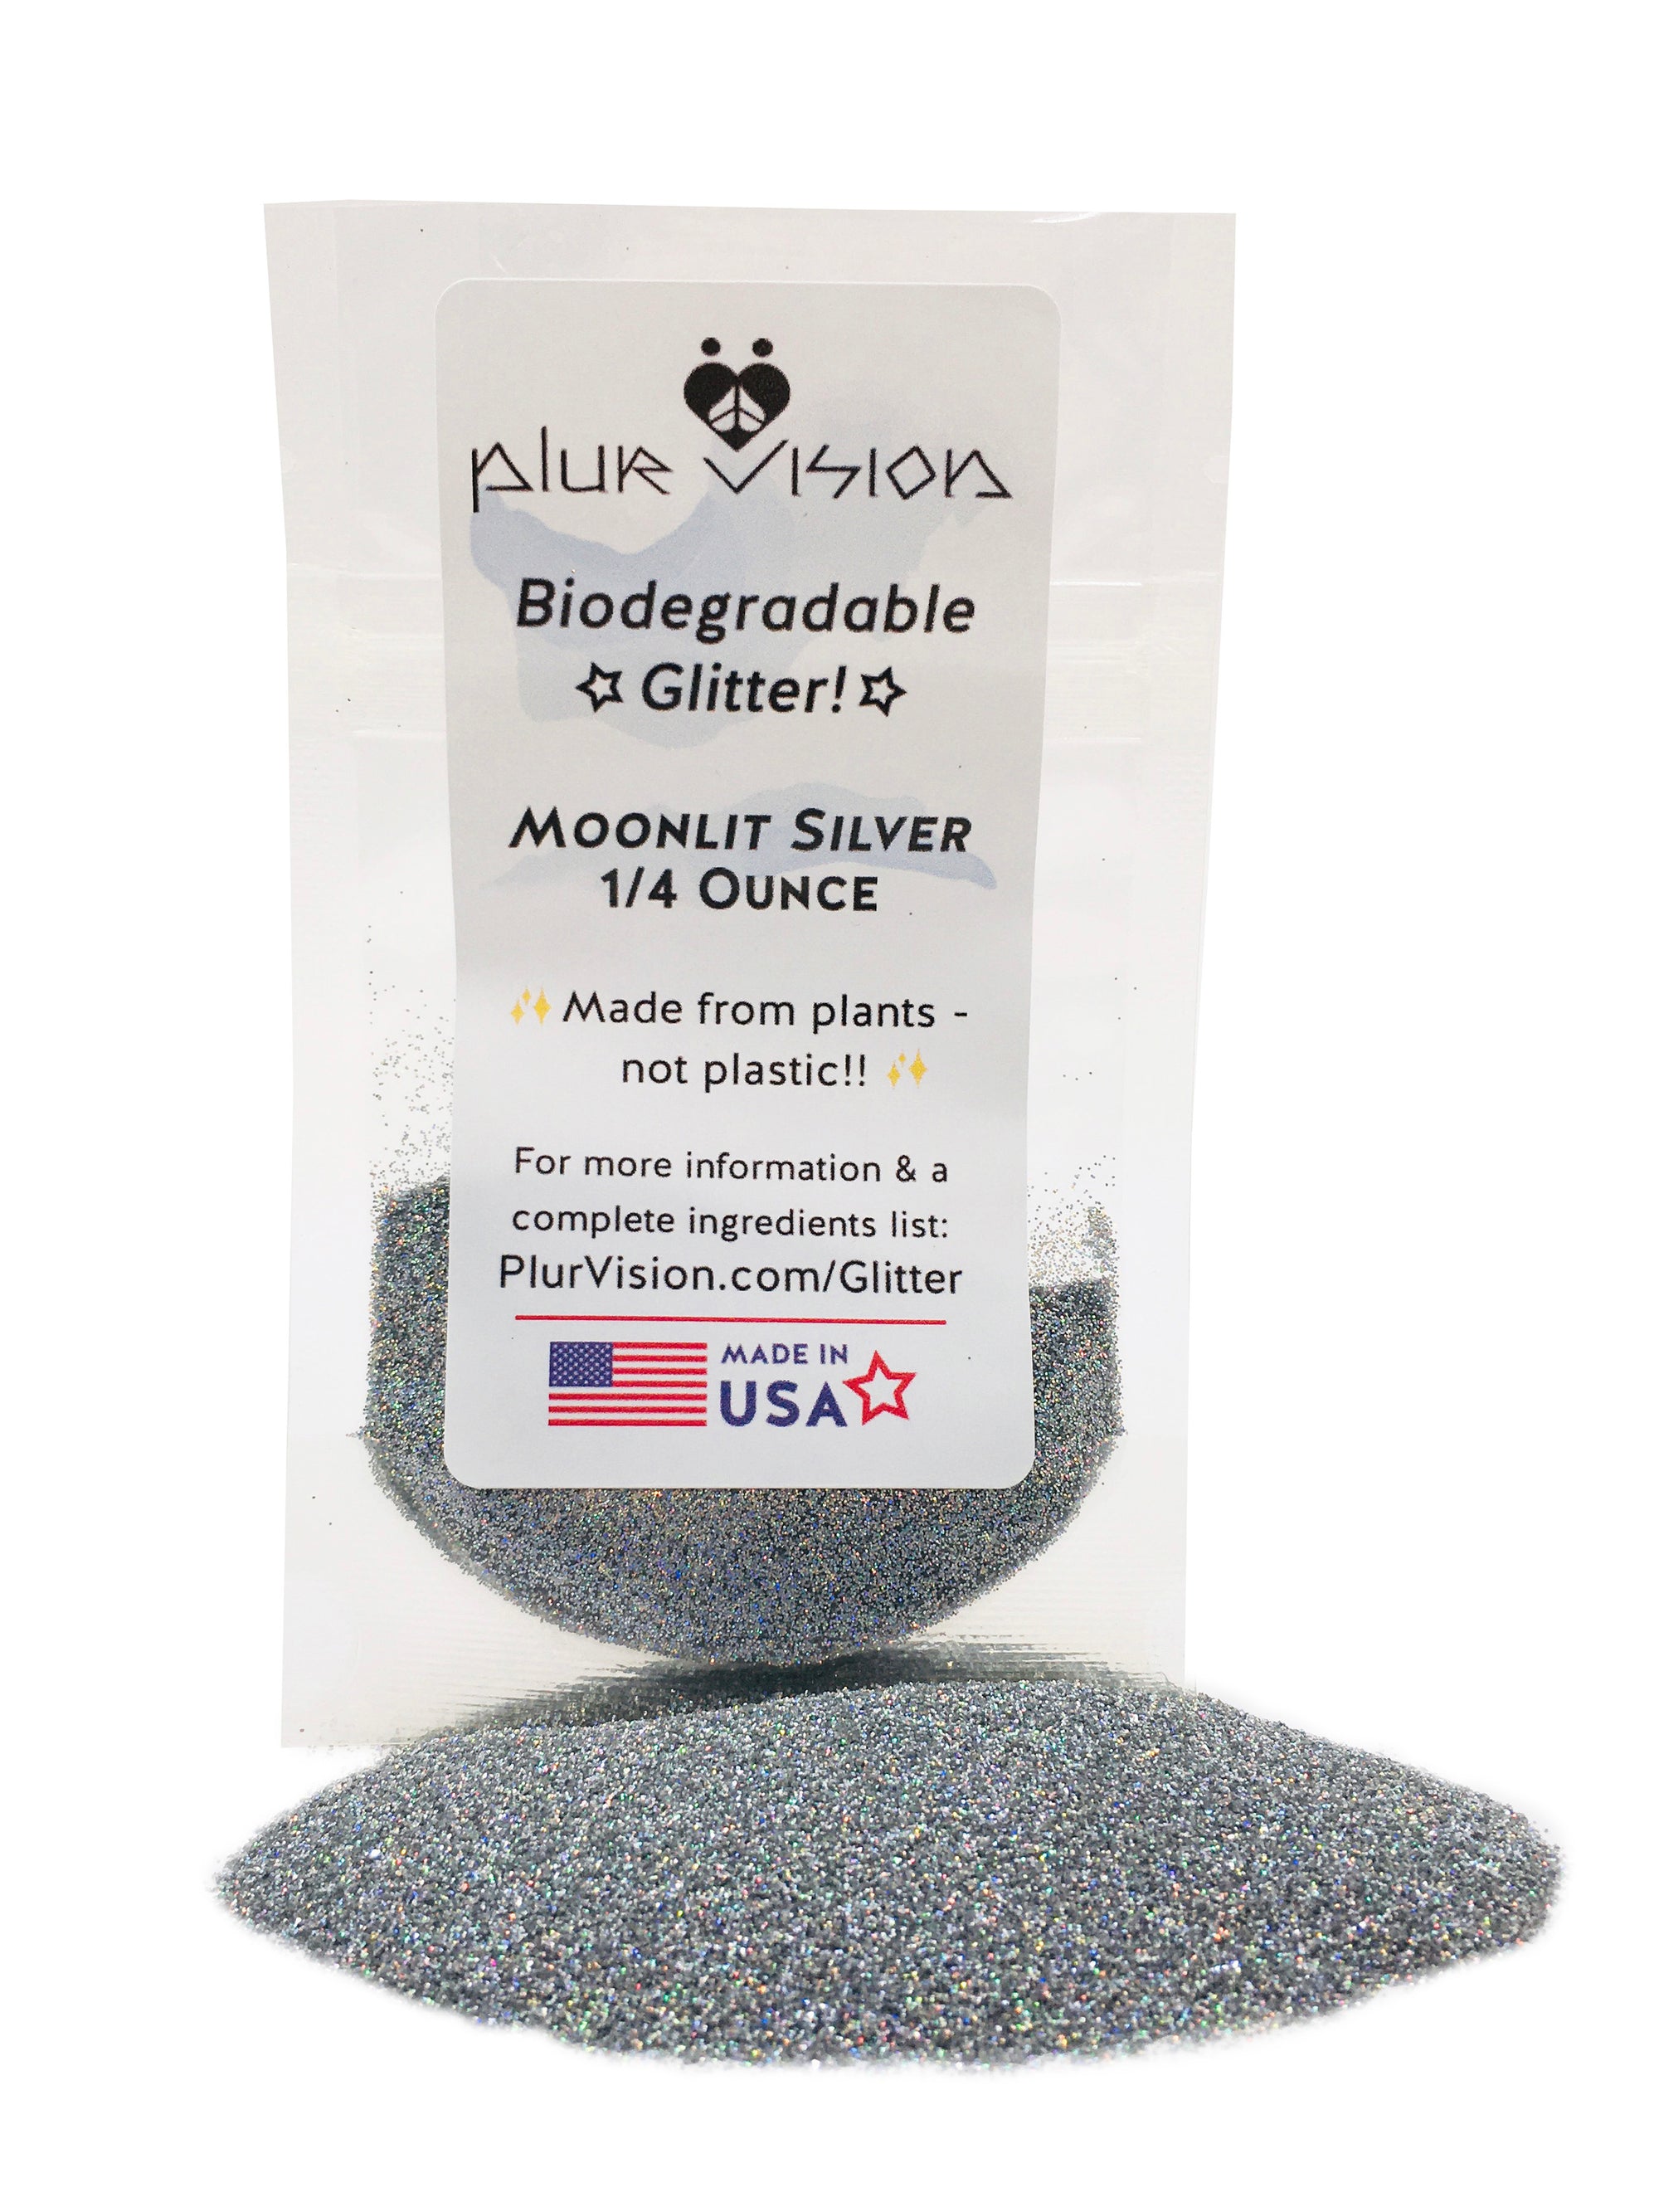 ✨ Moonlit Silver Biodegradable ✨ - Imagination